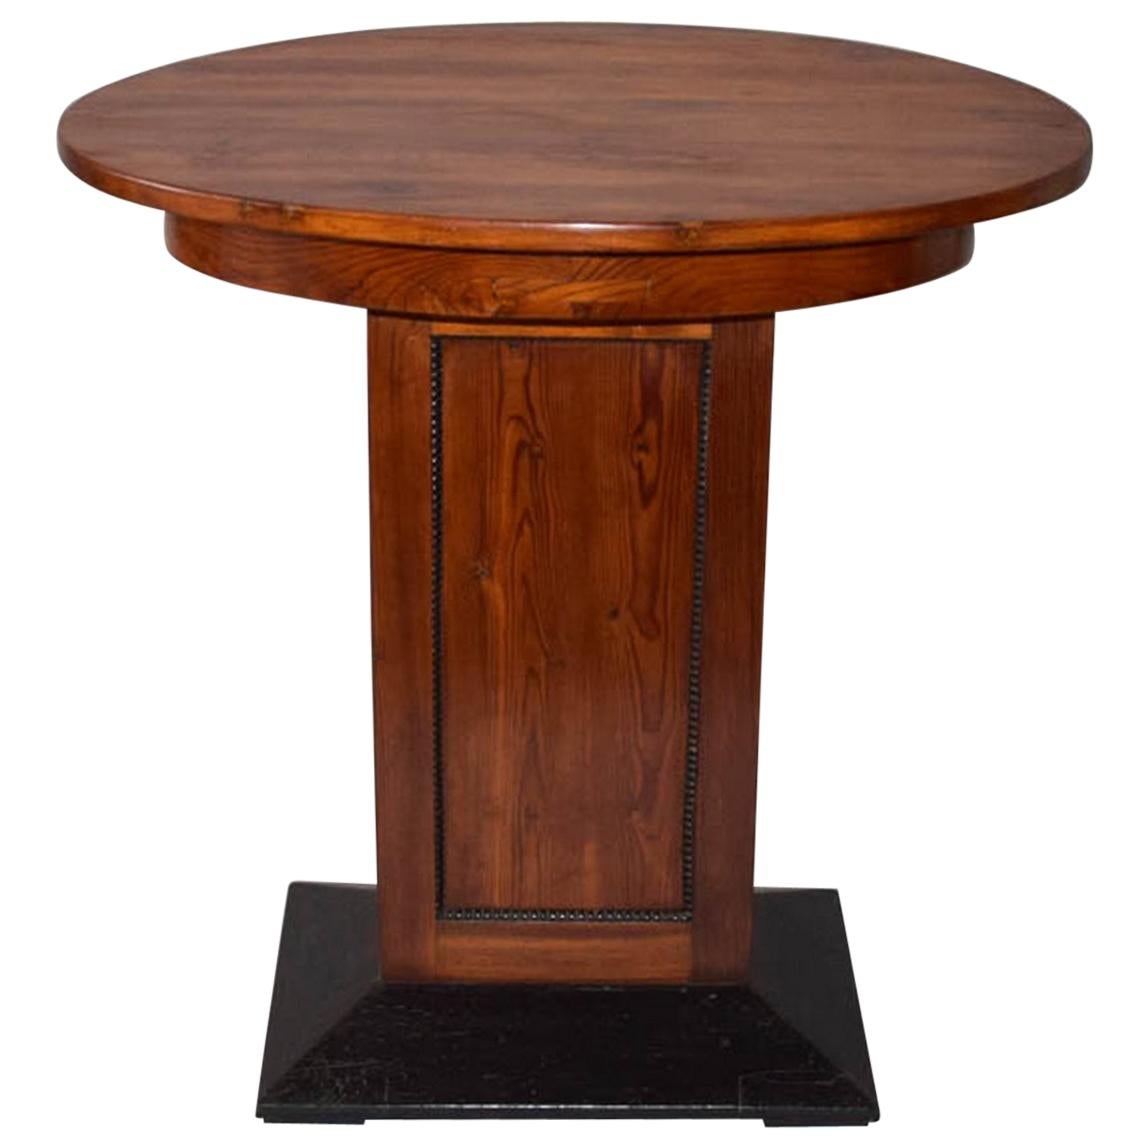 1930s Art Deco Oval Coffee Table